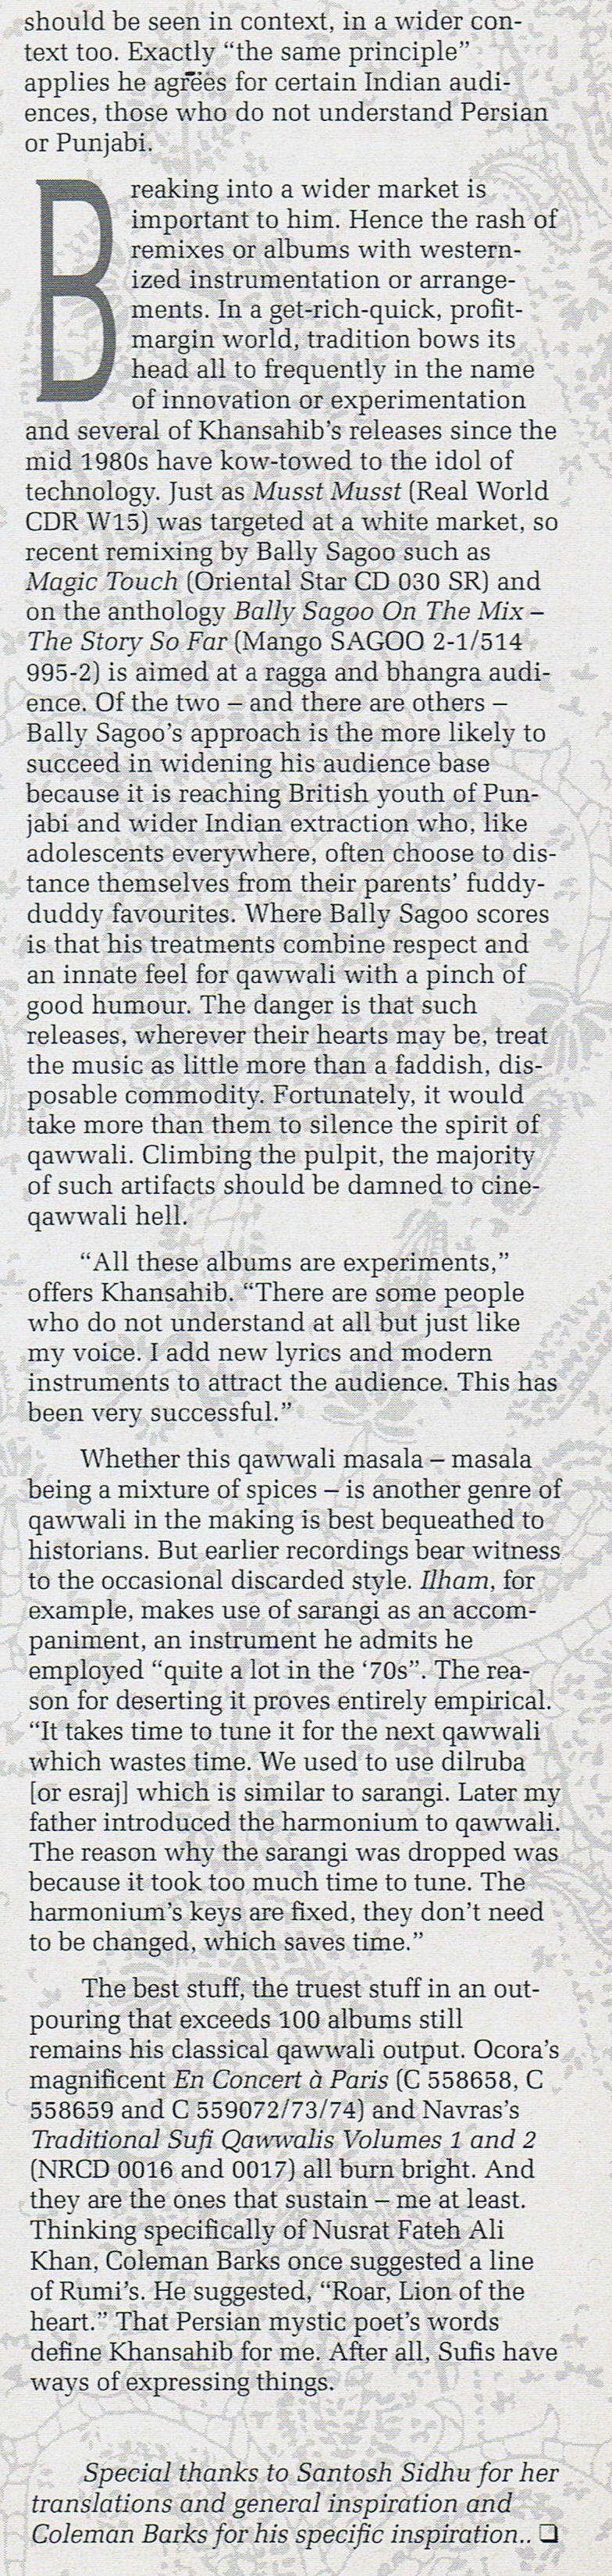 The Nusrat Ramble - Folk Roots 1993 p9